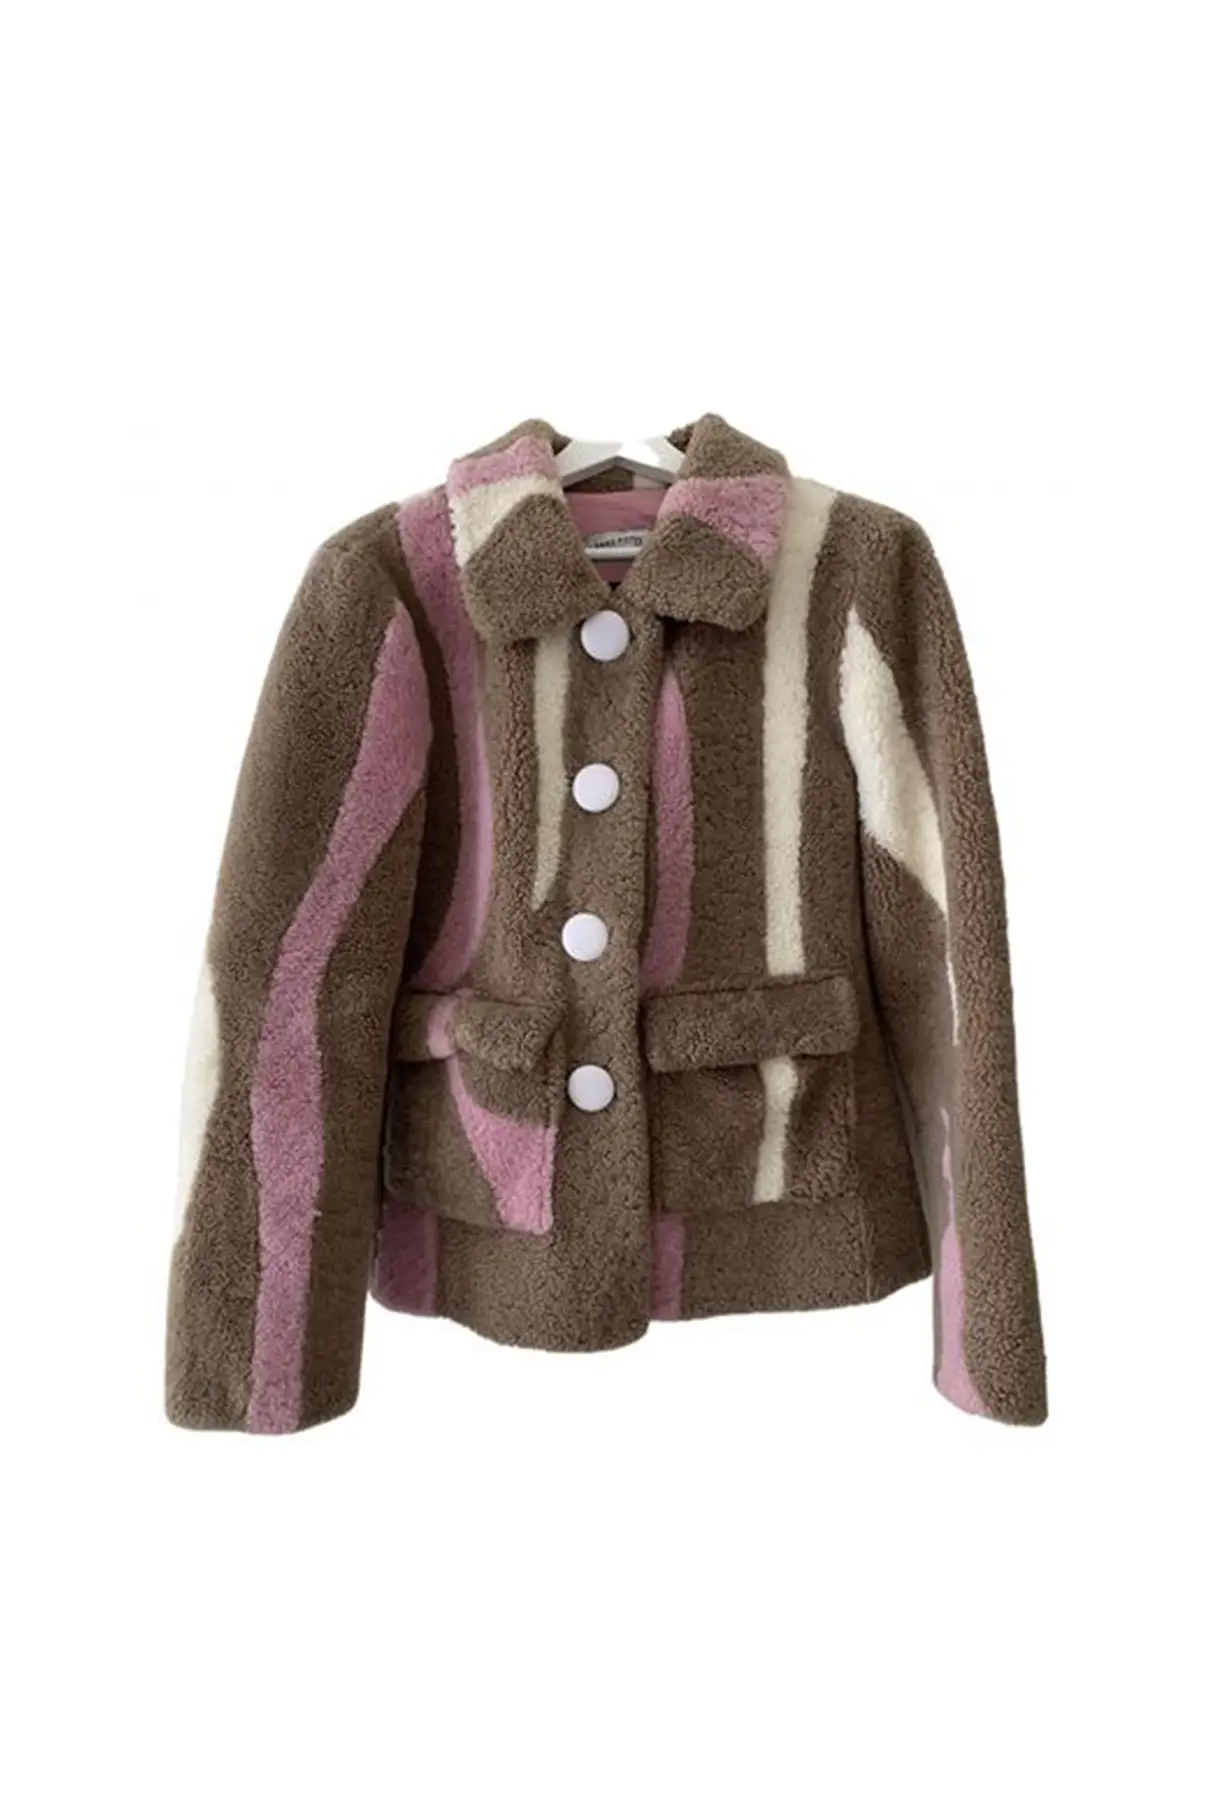 jacket-teddy-wool-camel-pink-stripes.jpg